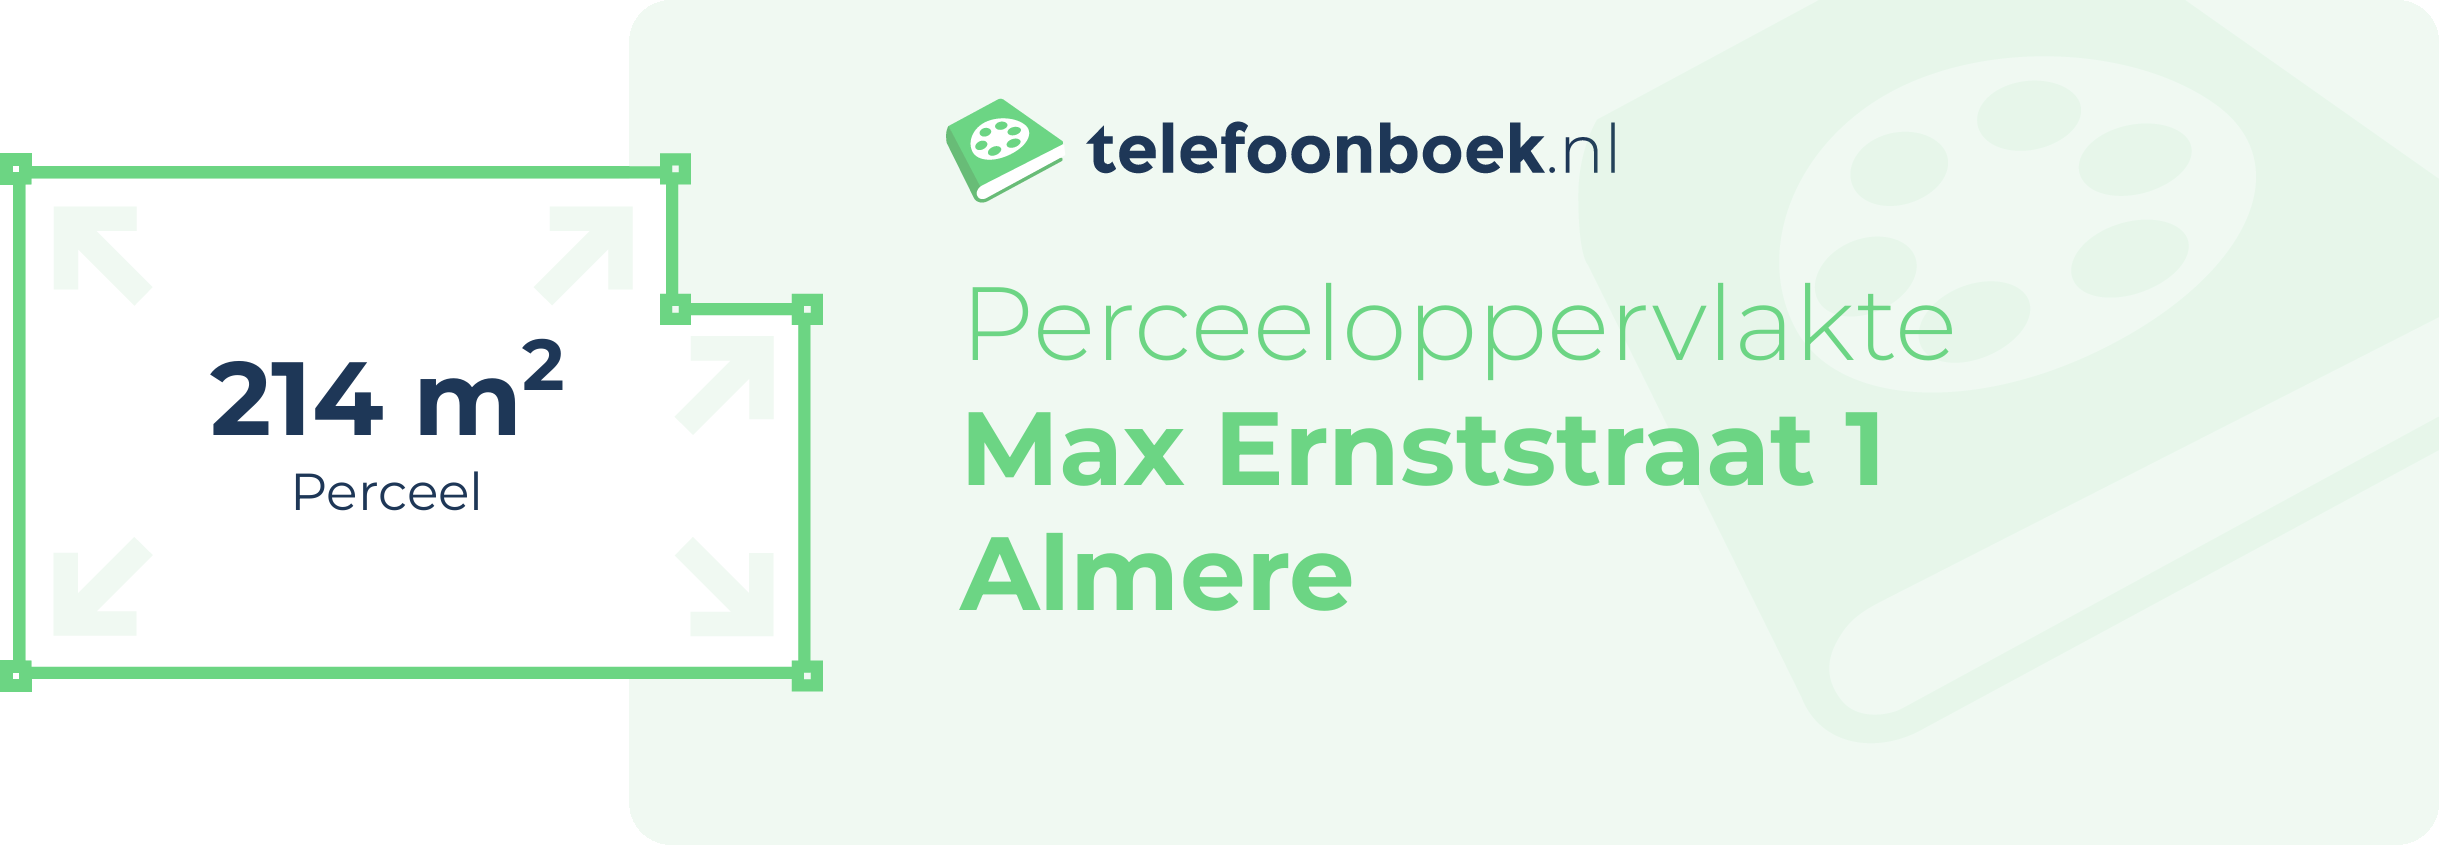 Perceeloppervlakte Max Ernststraat 1 Almere